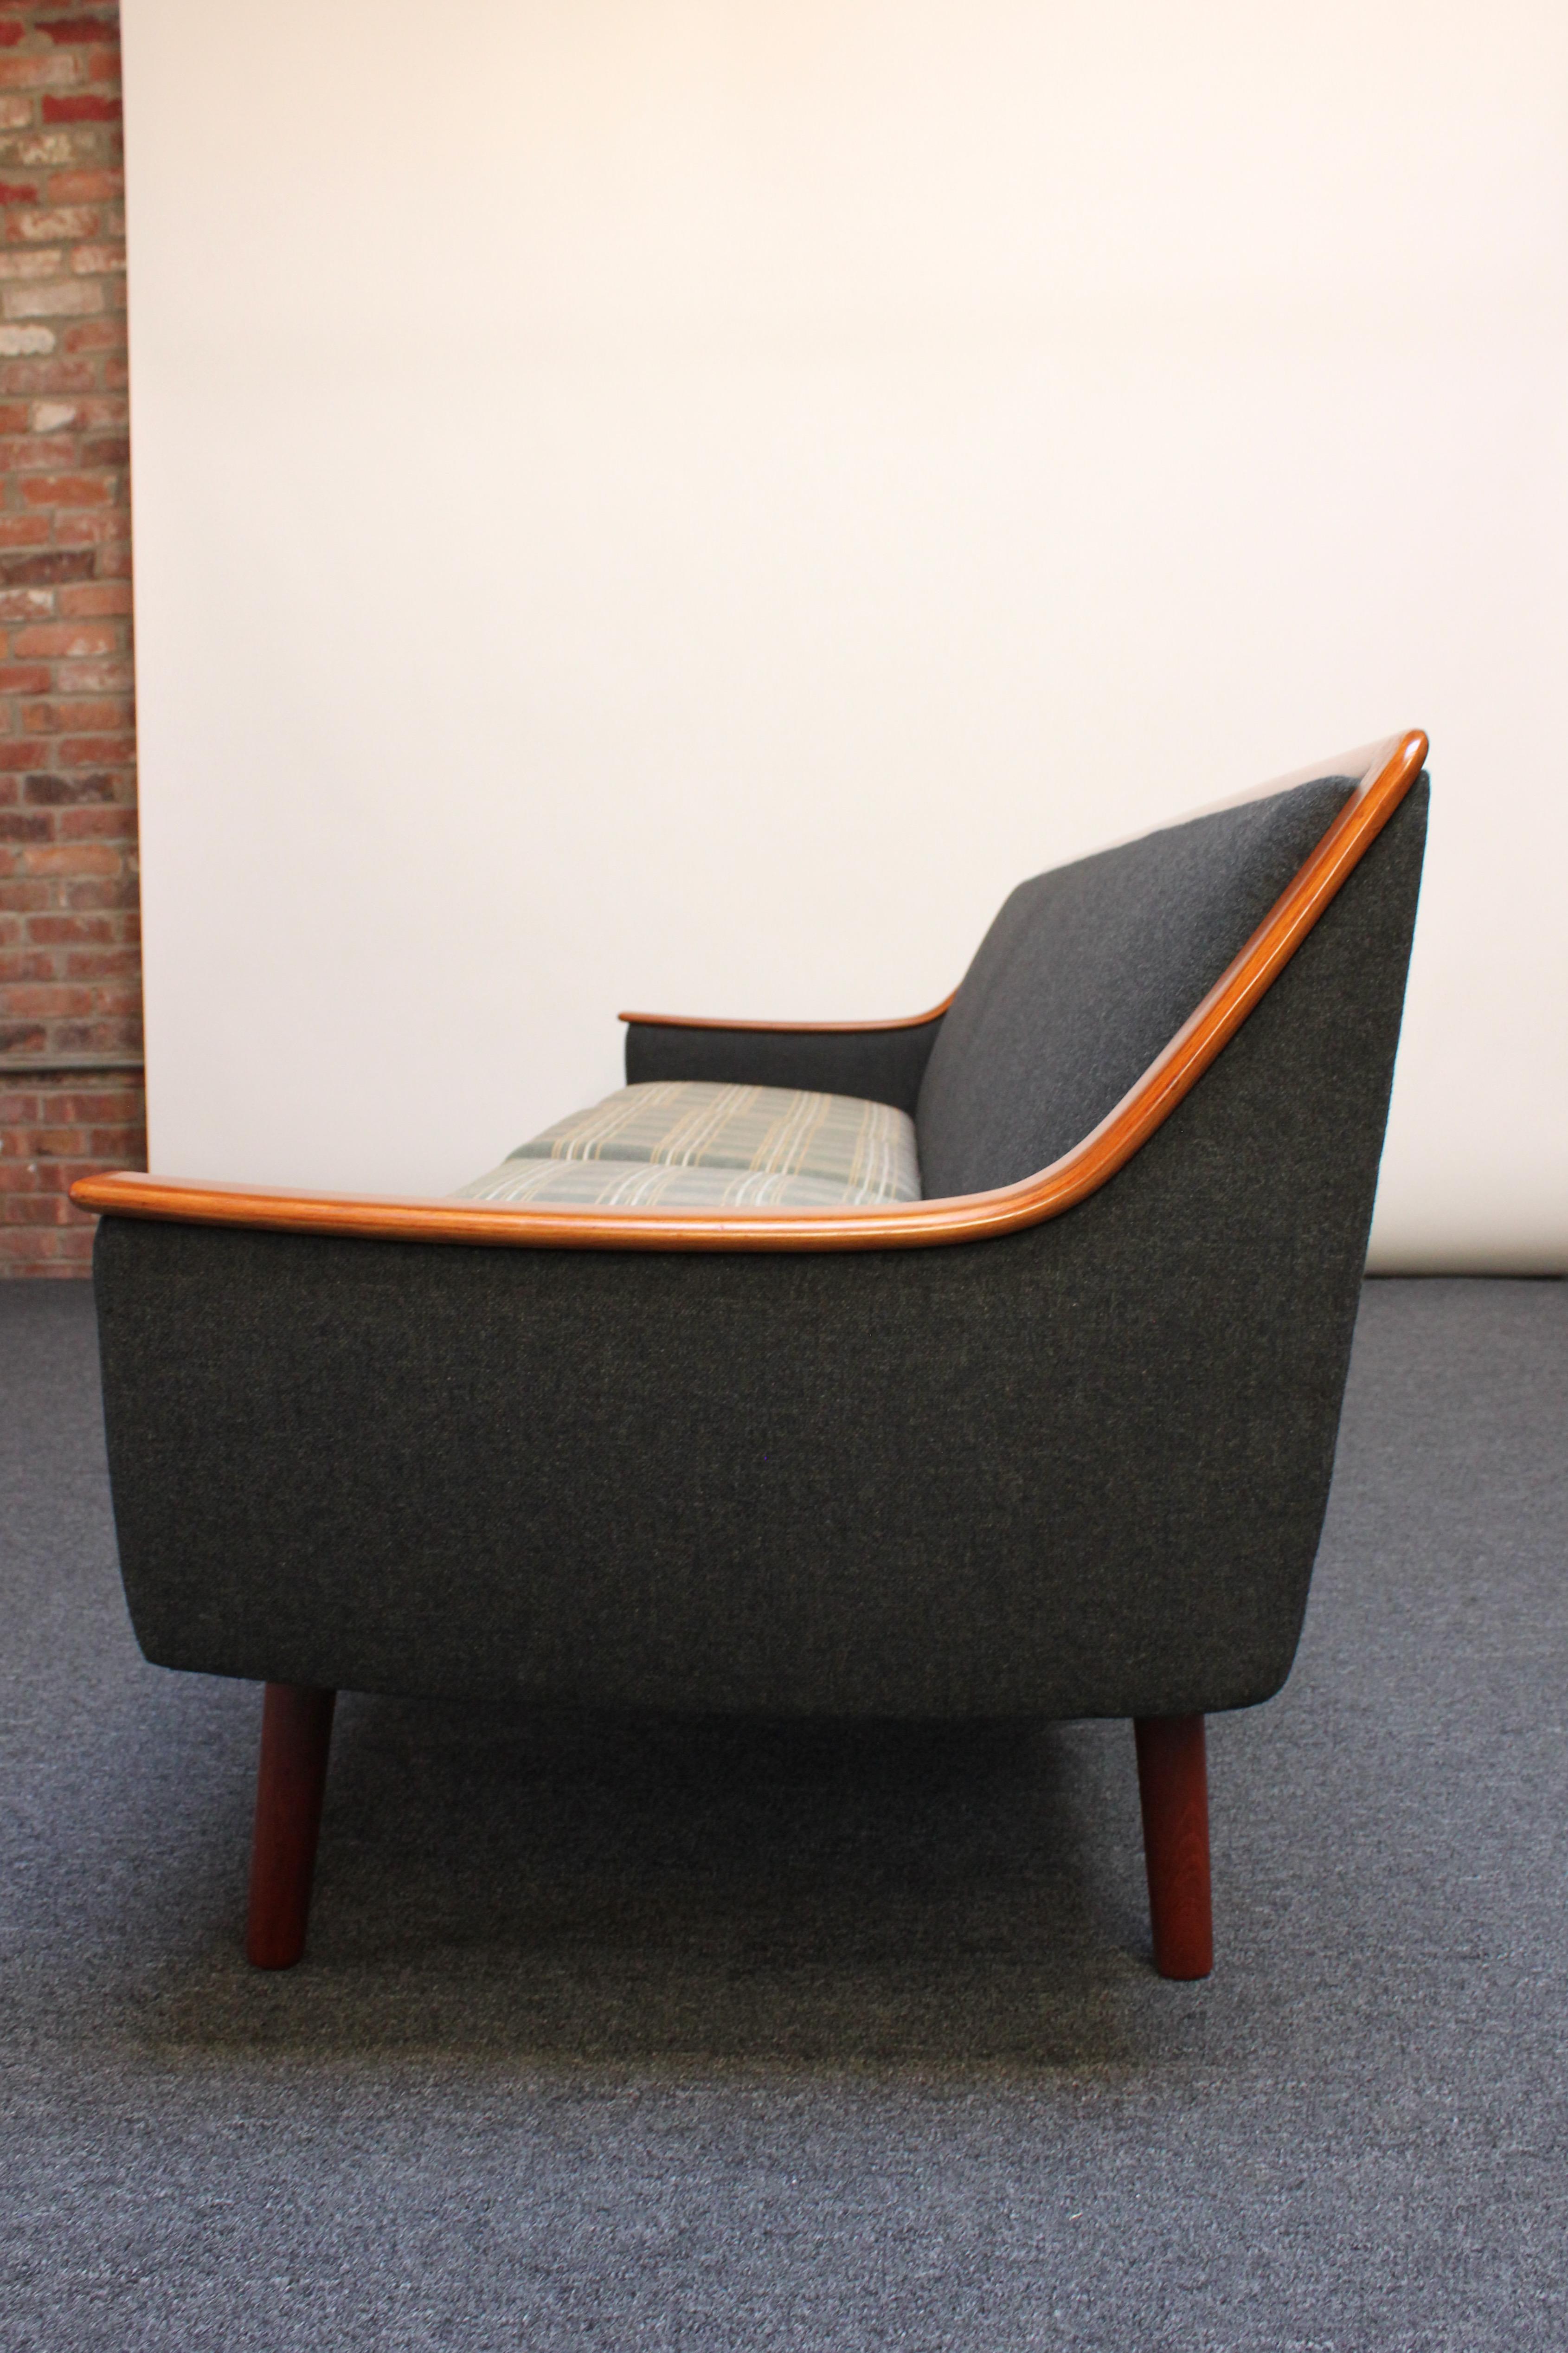 Long Norwegian Modern Exposed Teak Sofa with Original Upholstery For Sale 1